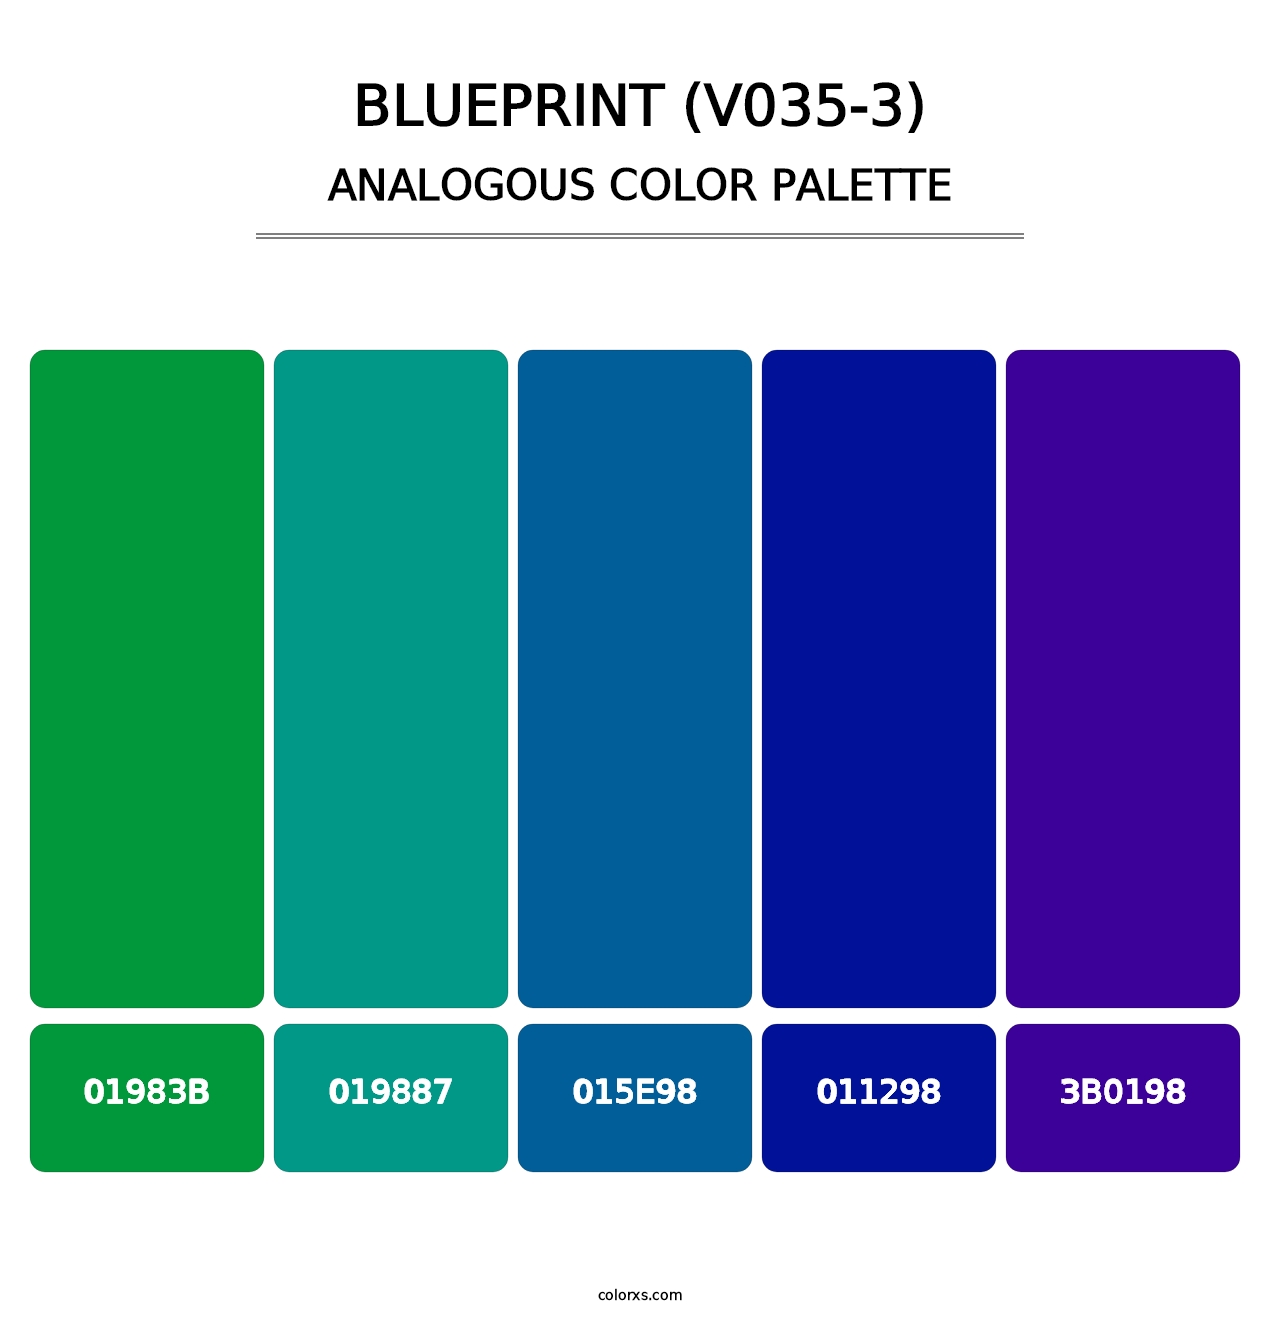 Blueprint (V035-3) - Analogous Color Palette